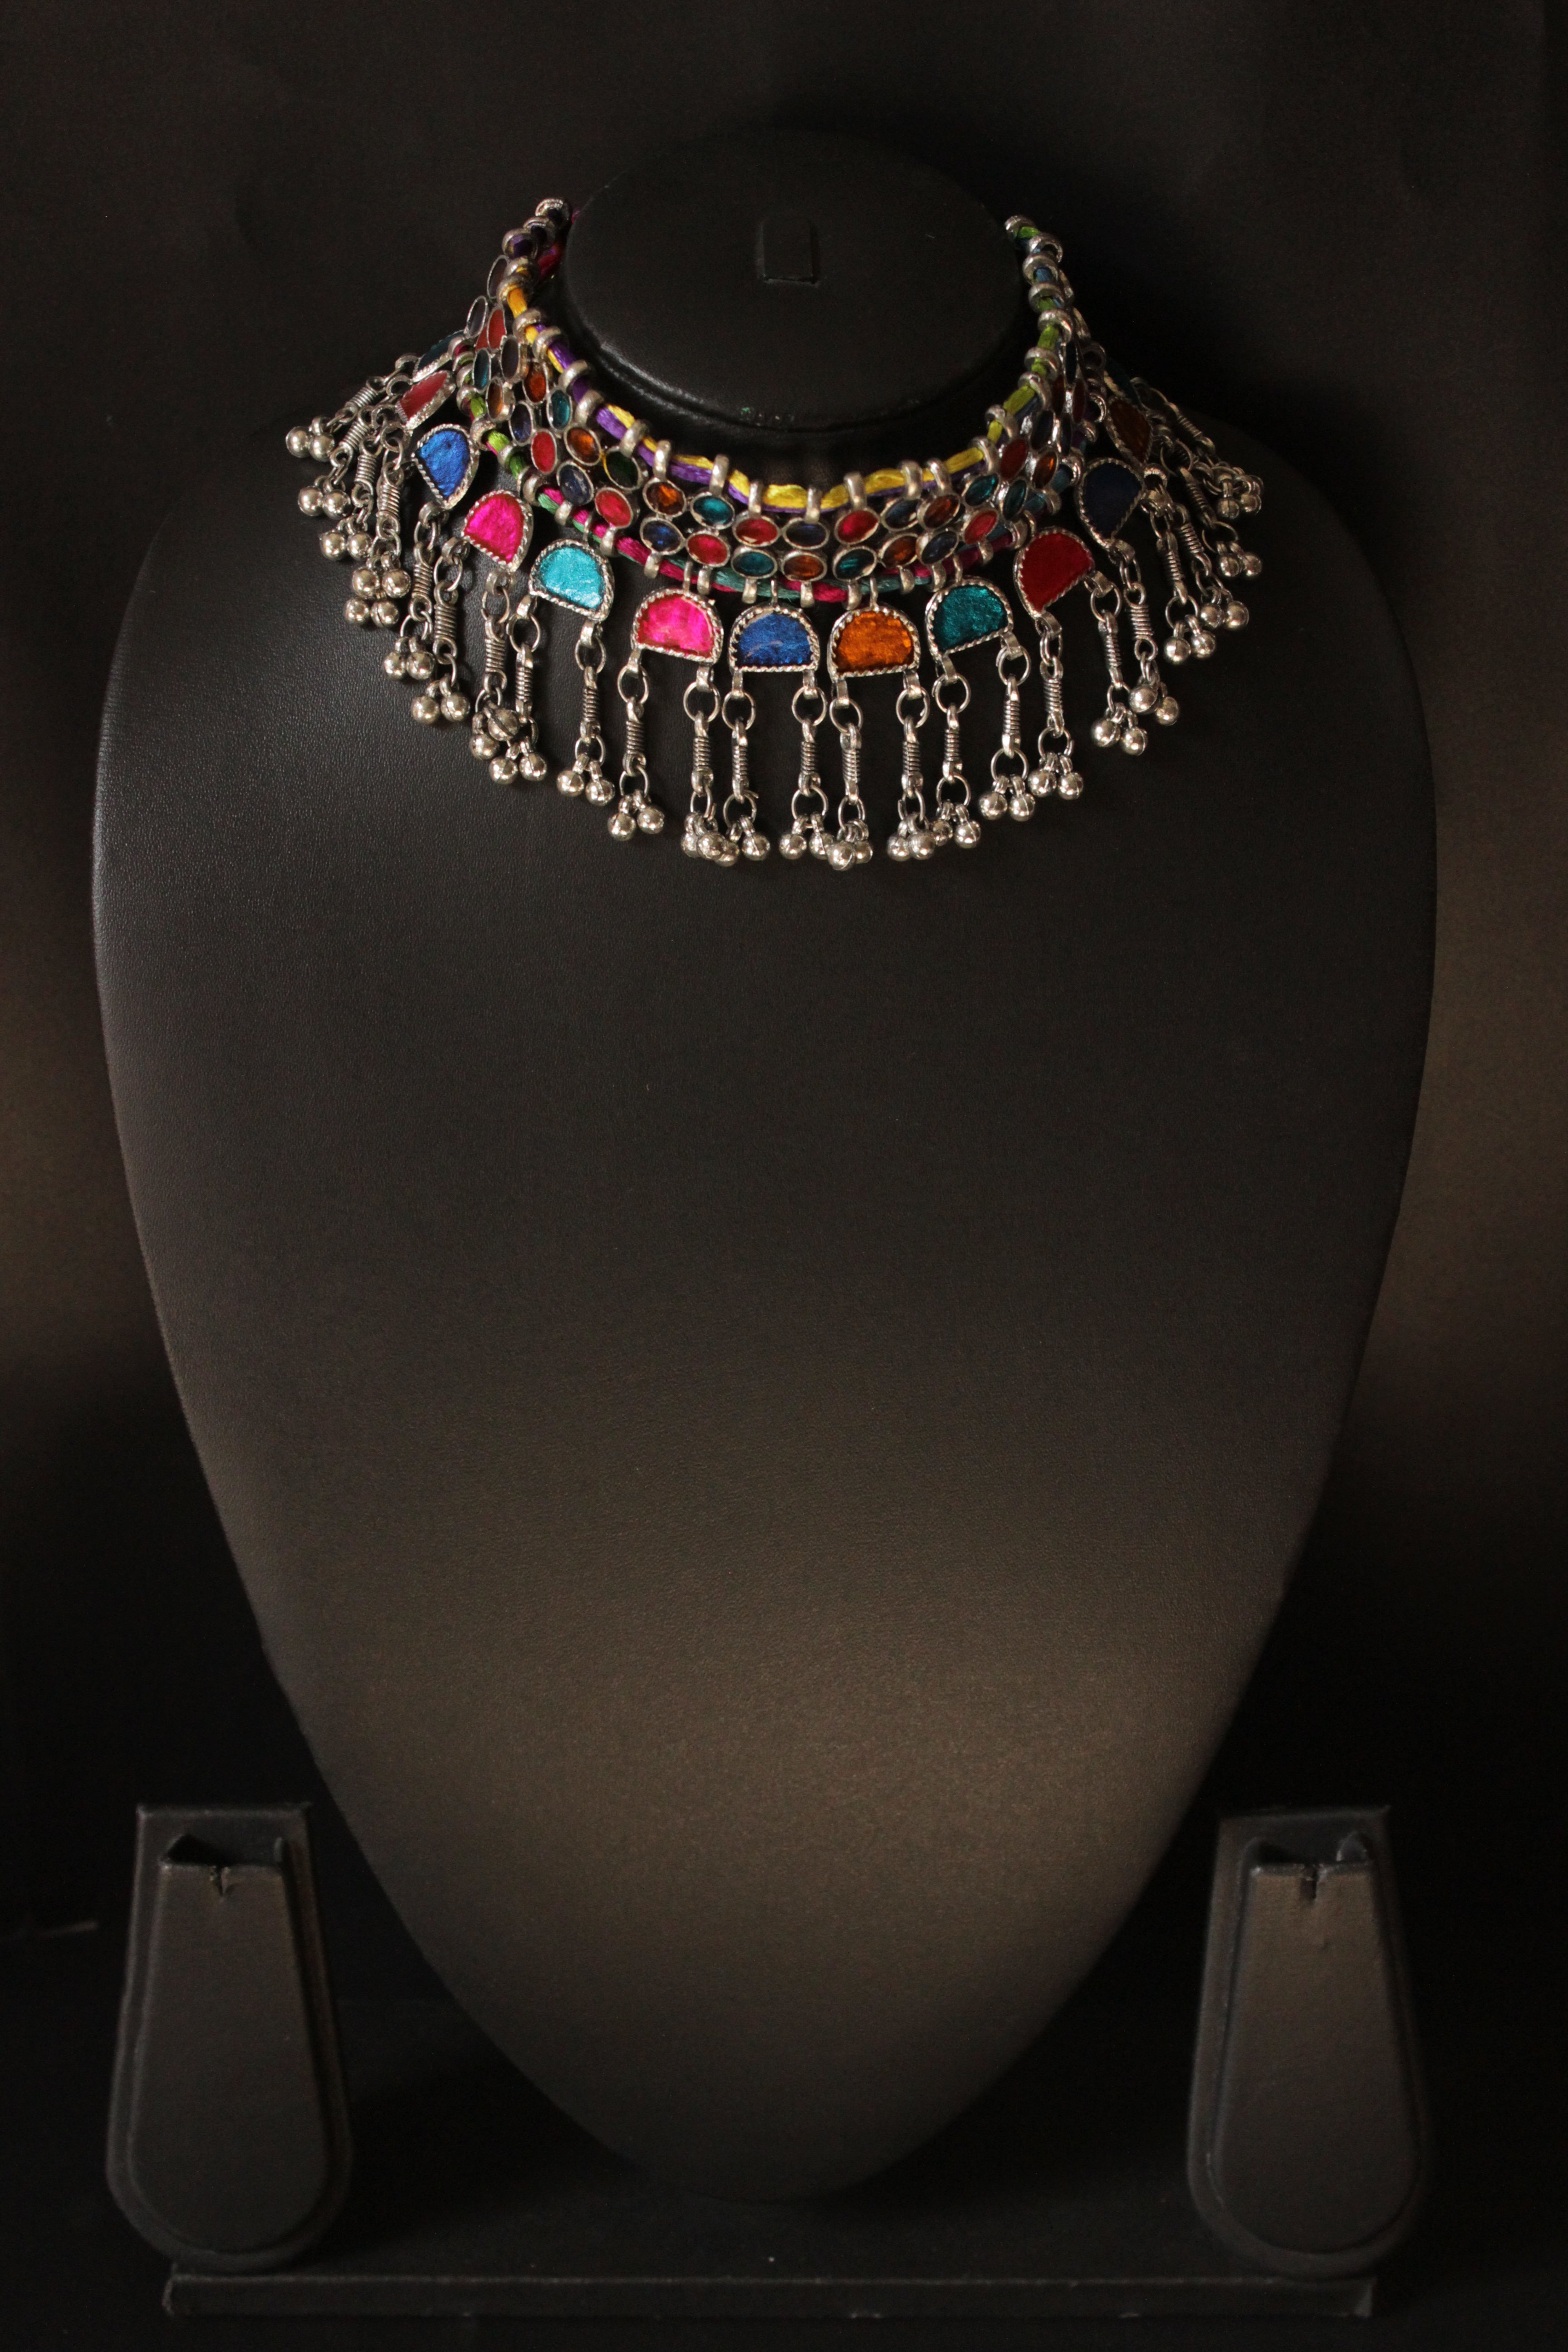 Vibrant Multi-Color Glass Stones Embedded Adjustable Length Thread Closure Choker Necklace Set